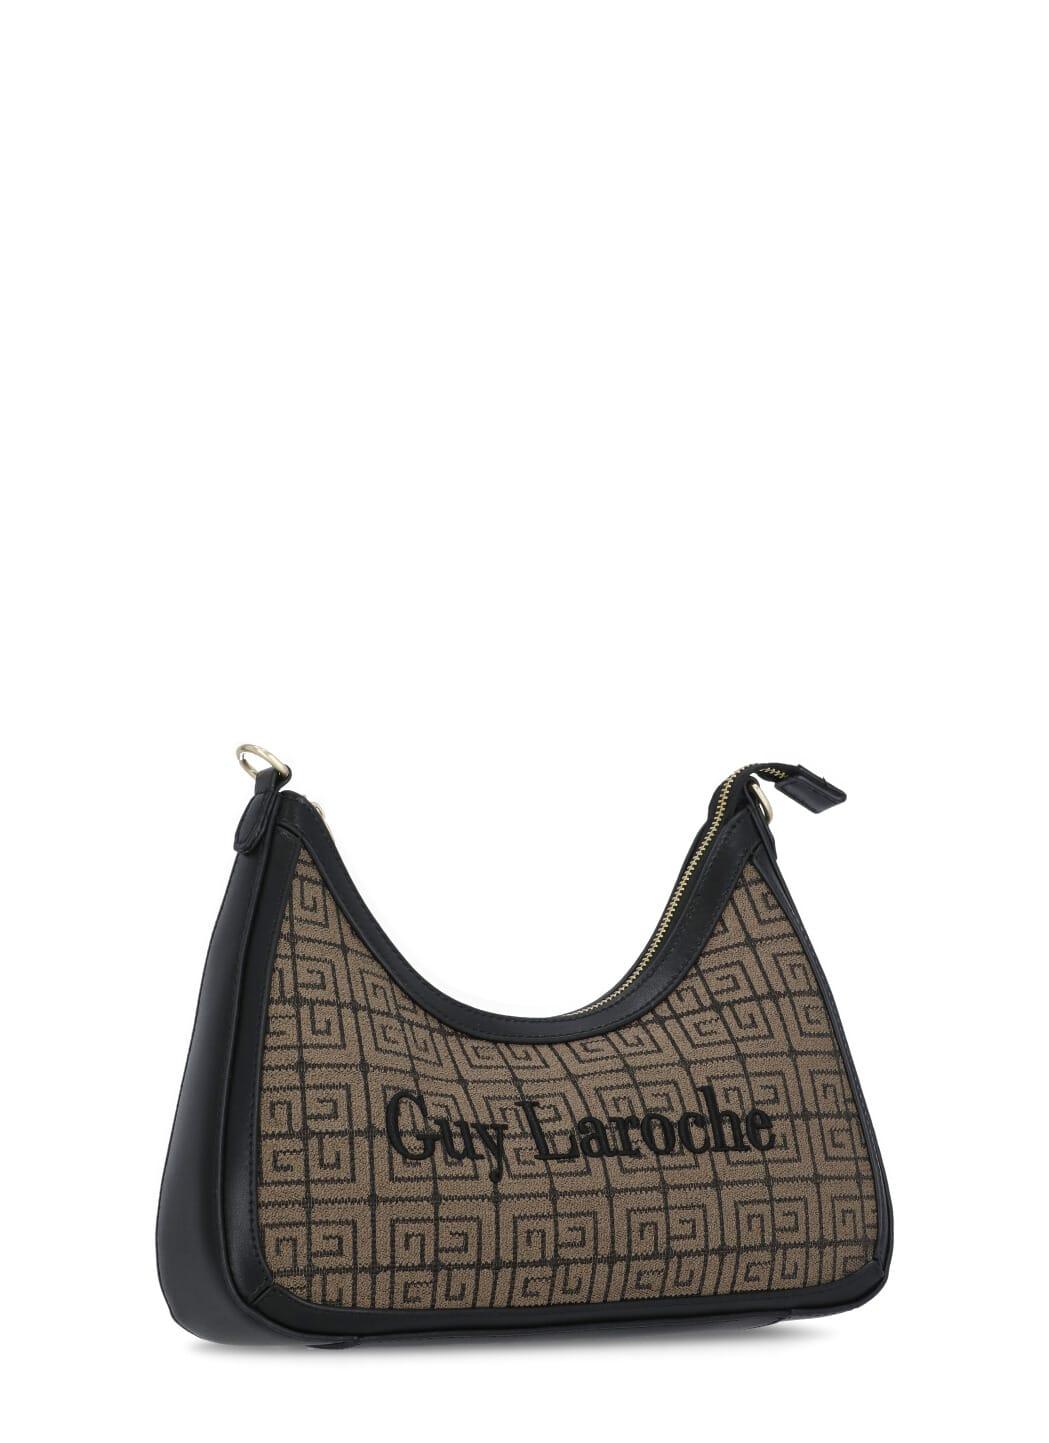 Guy Laroche France Leather Women Vintage Cross-body Shoulder Small Black Bag